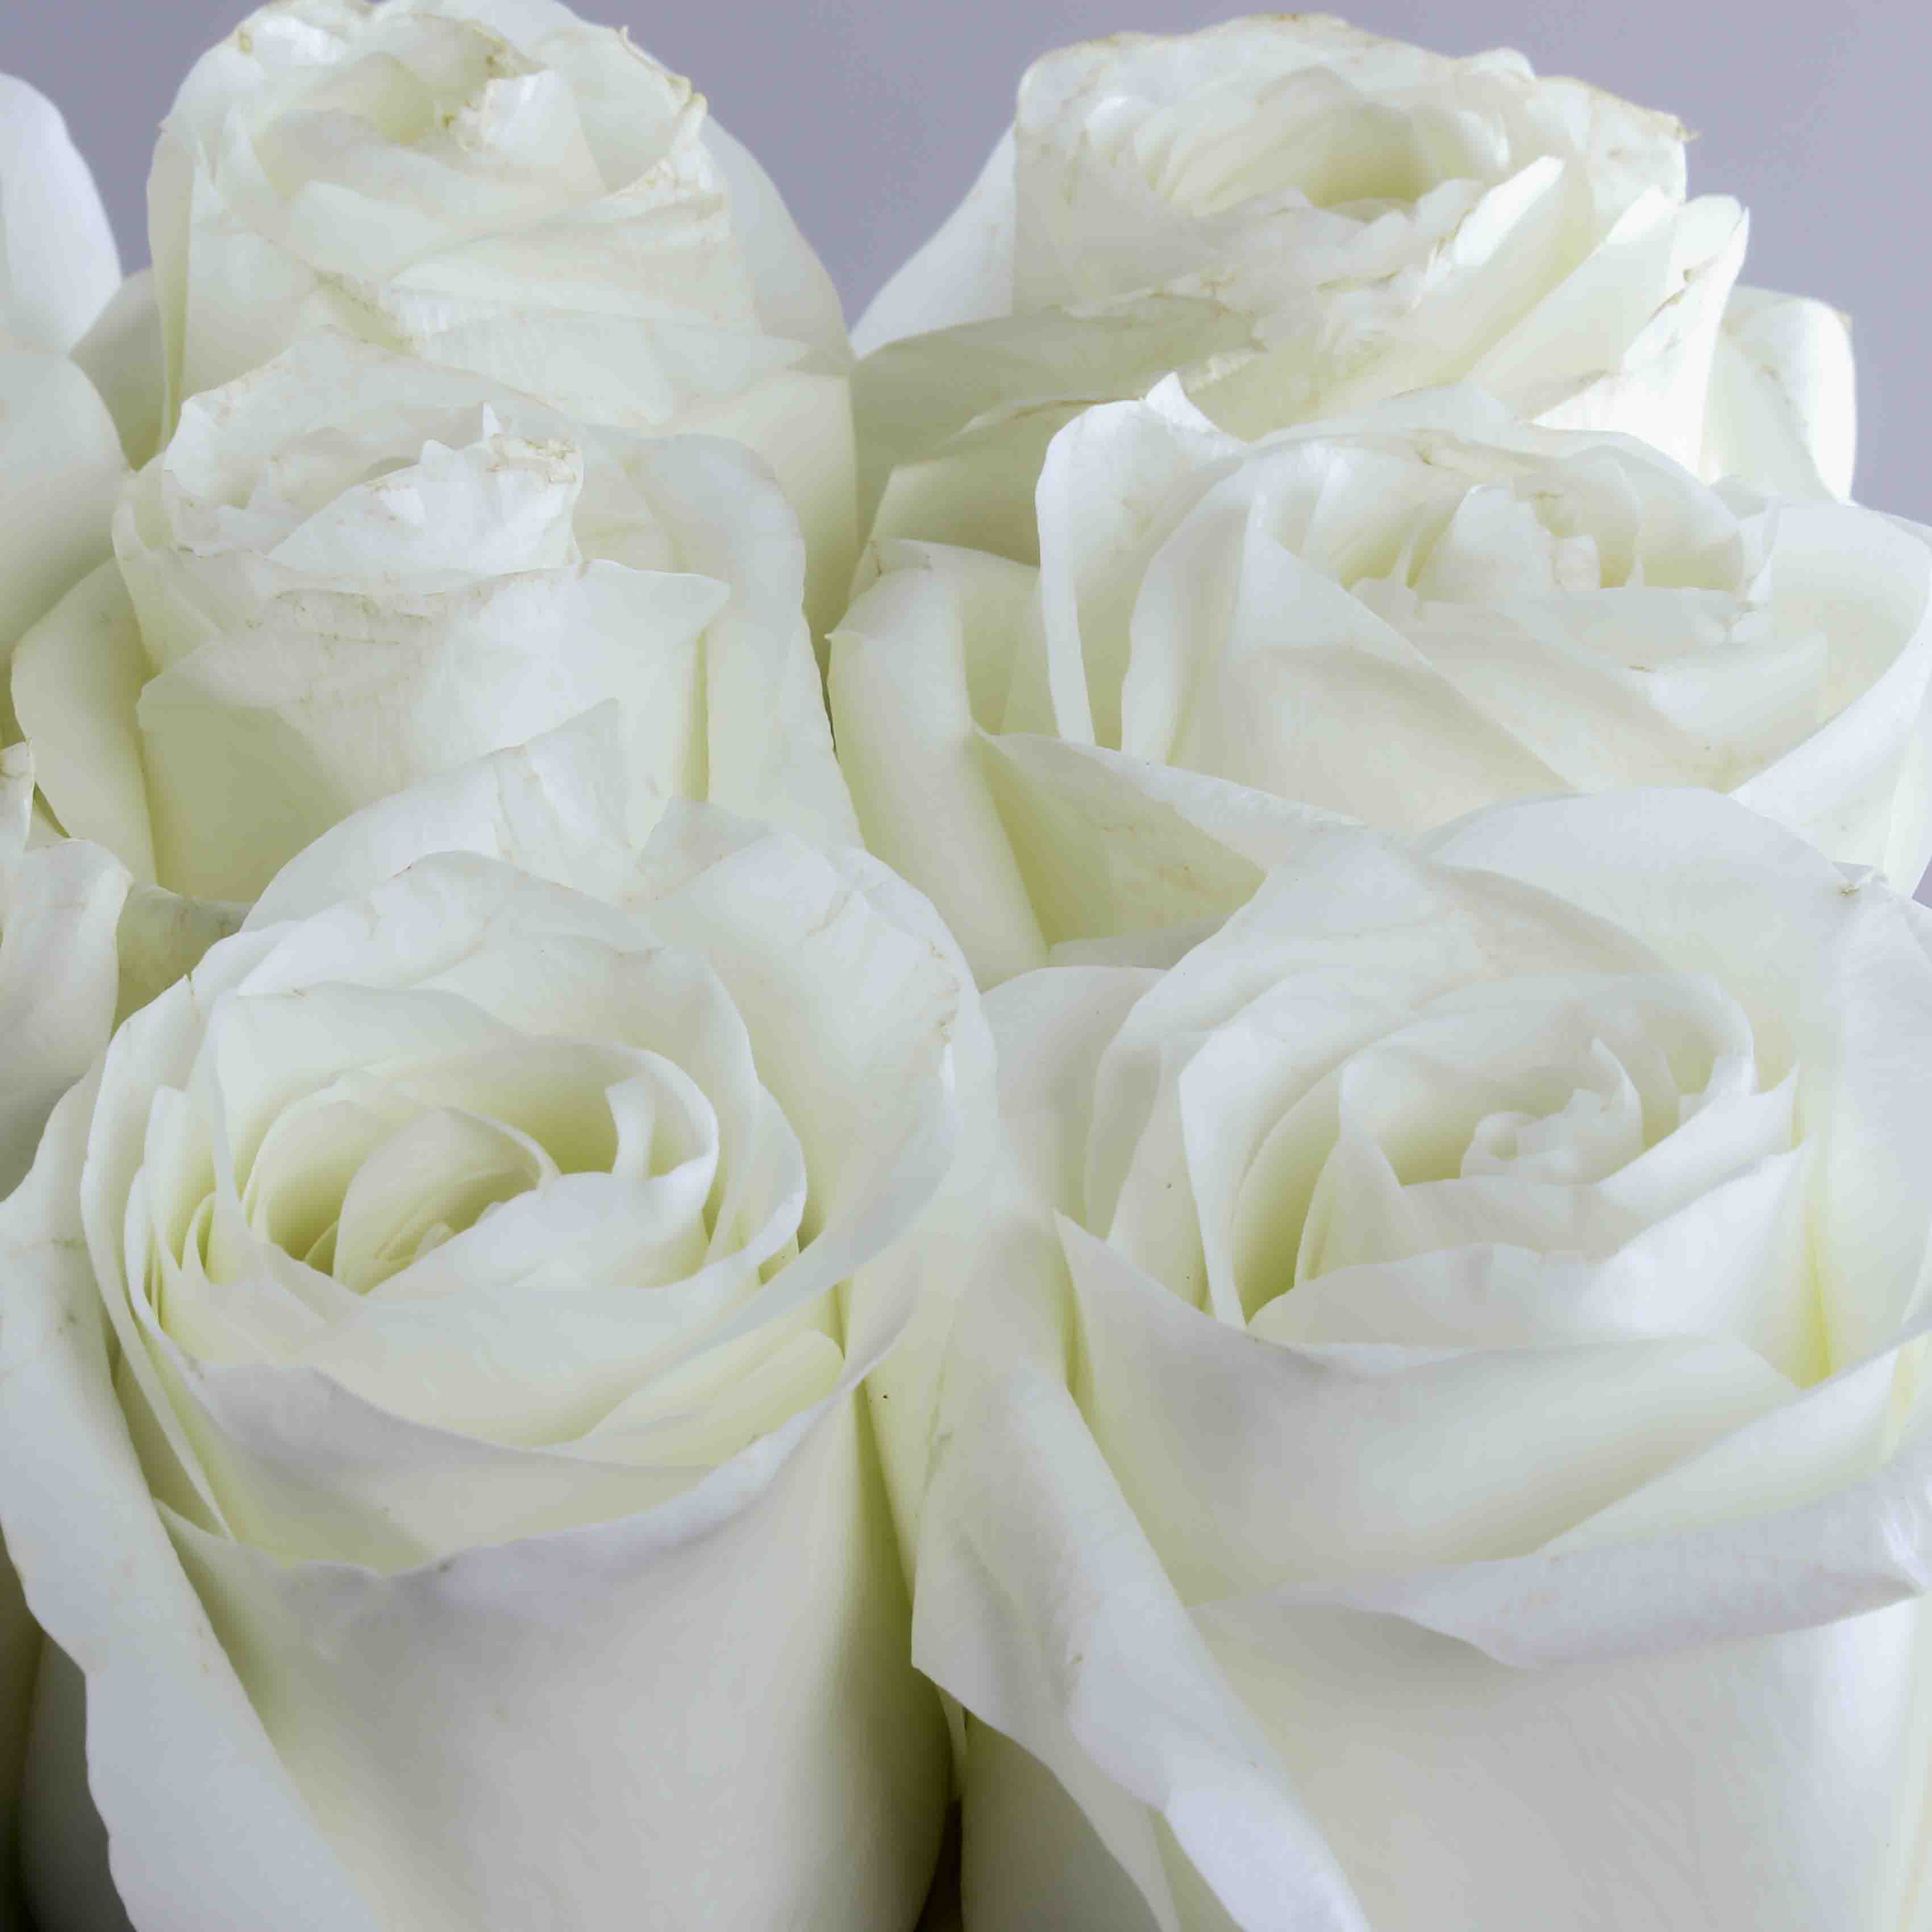 White roses box